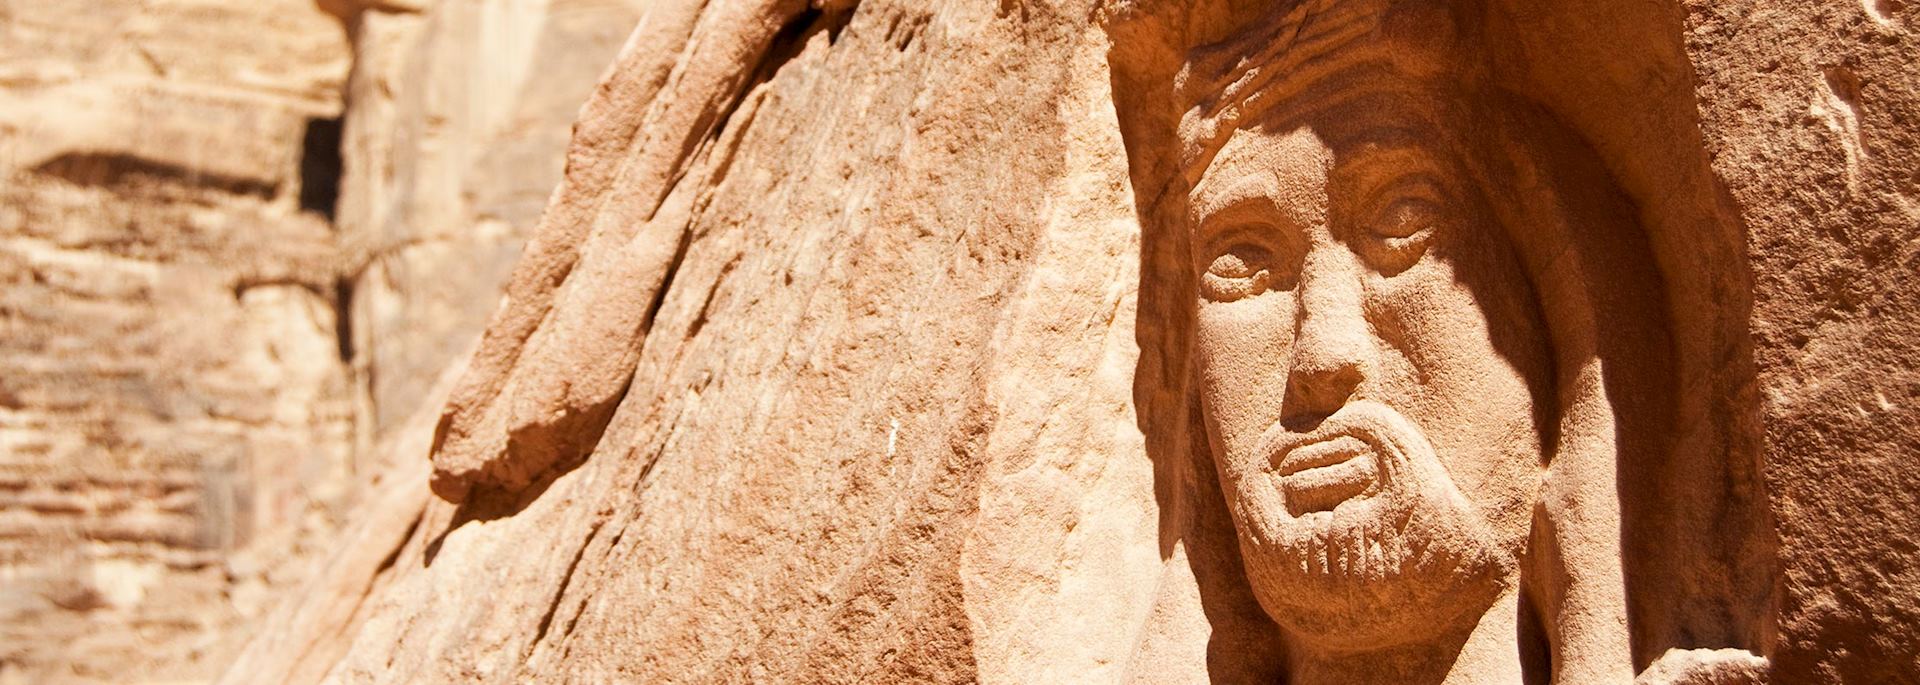 Carving of Lawrence of Arabia, Wadi Rum